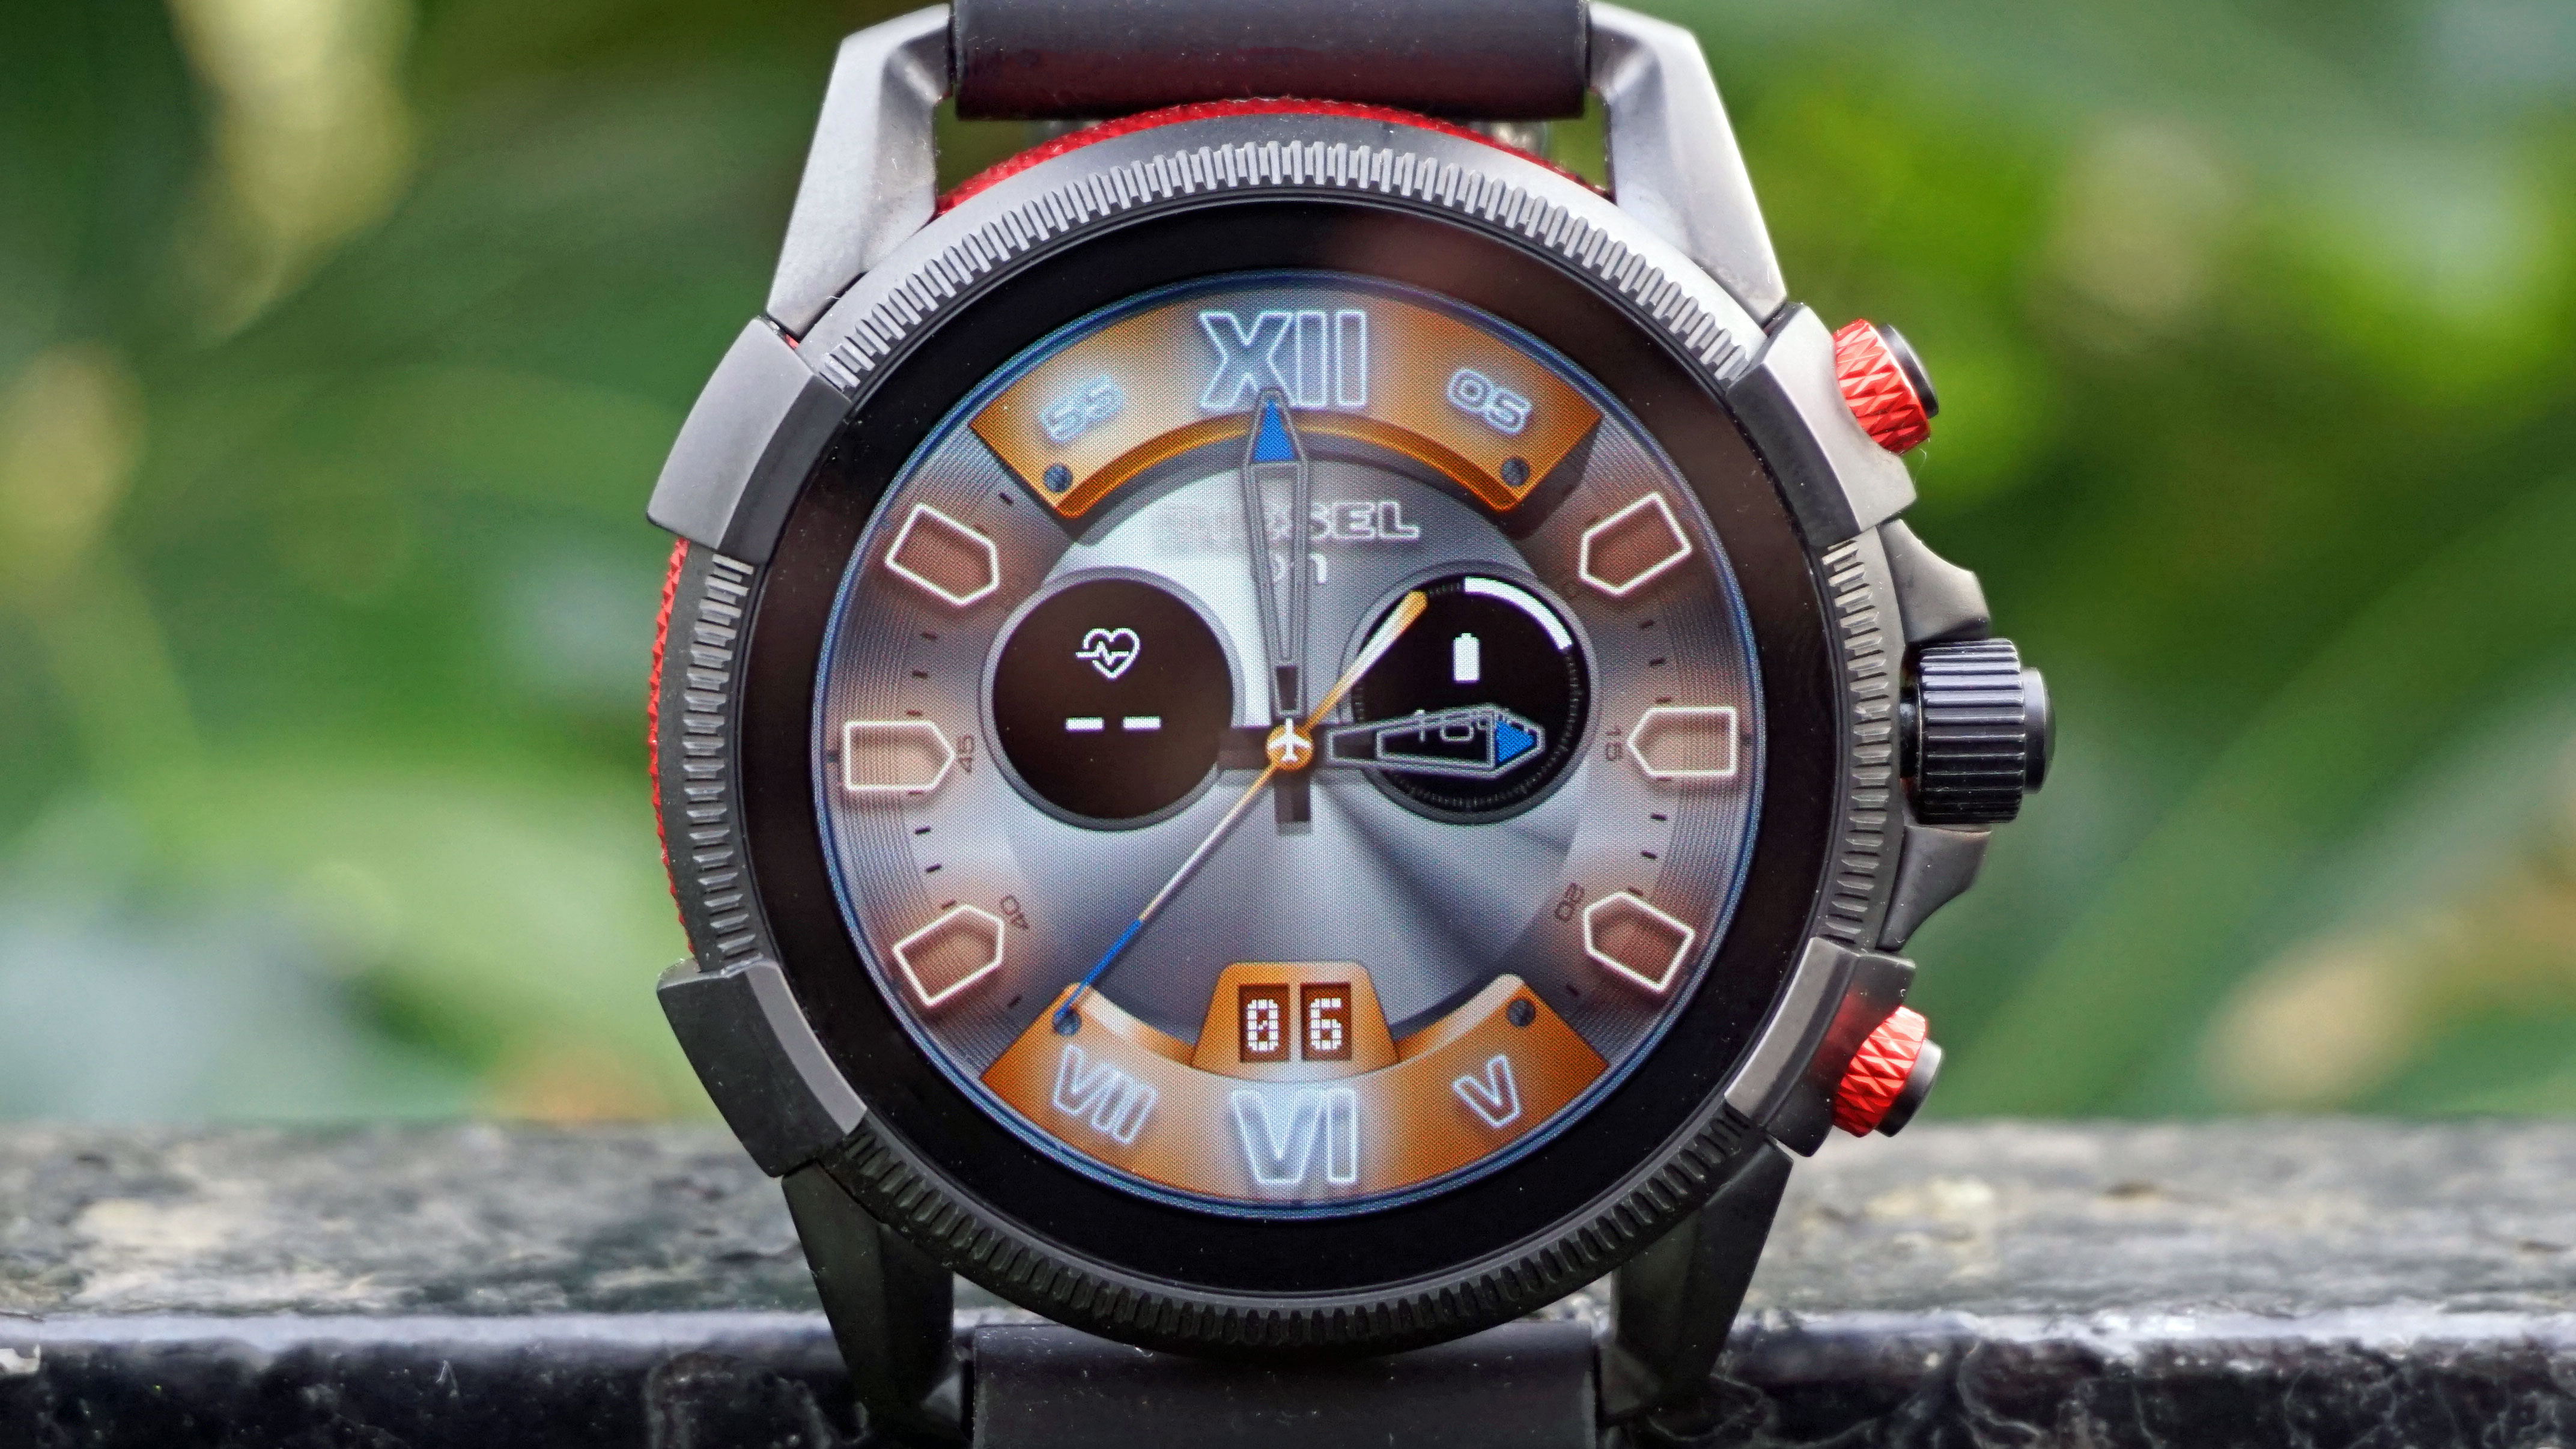 diesel smartwatch 2.5 review